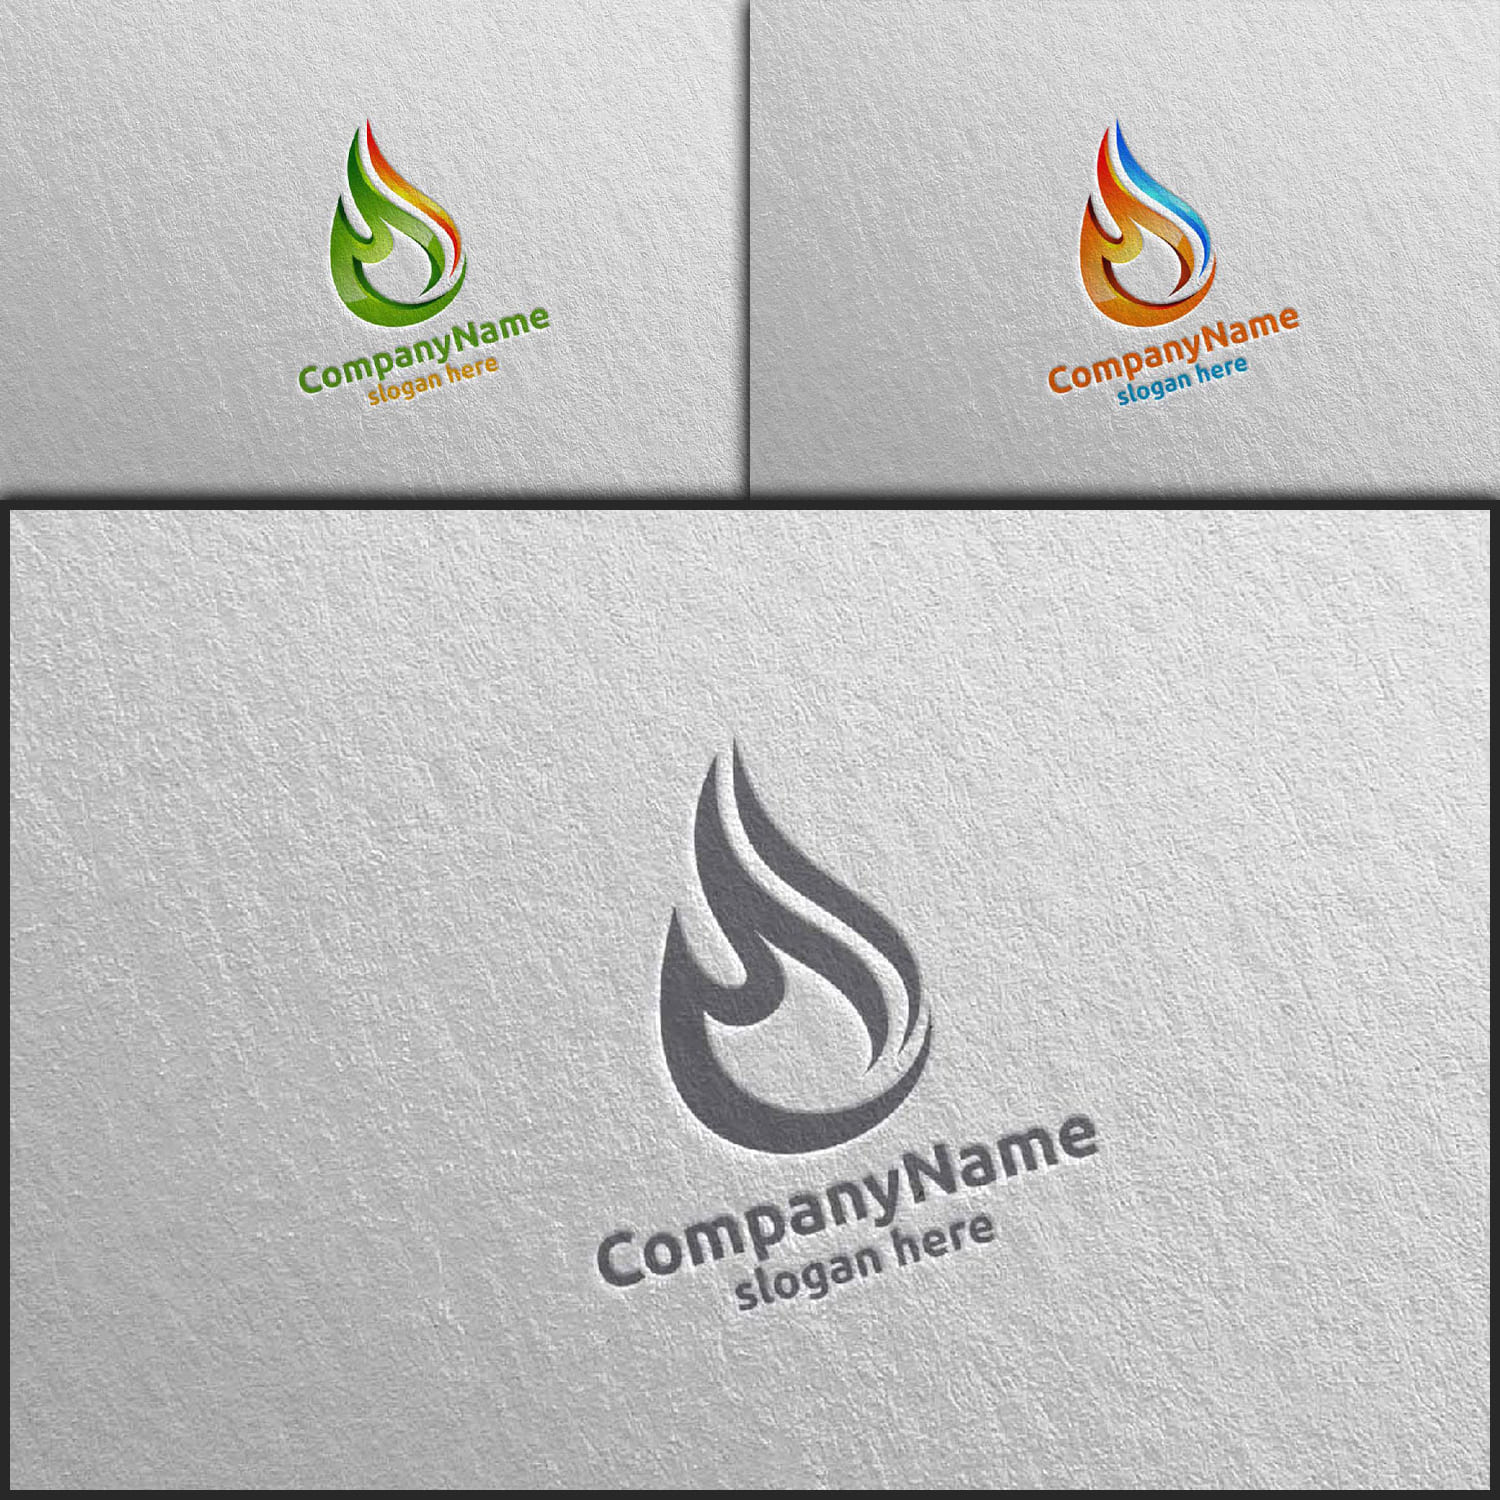 3D Fire Flame Element Logo Design Created By denayunedb.